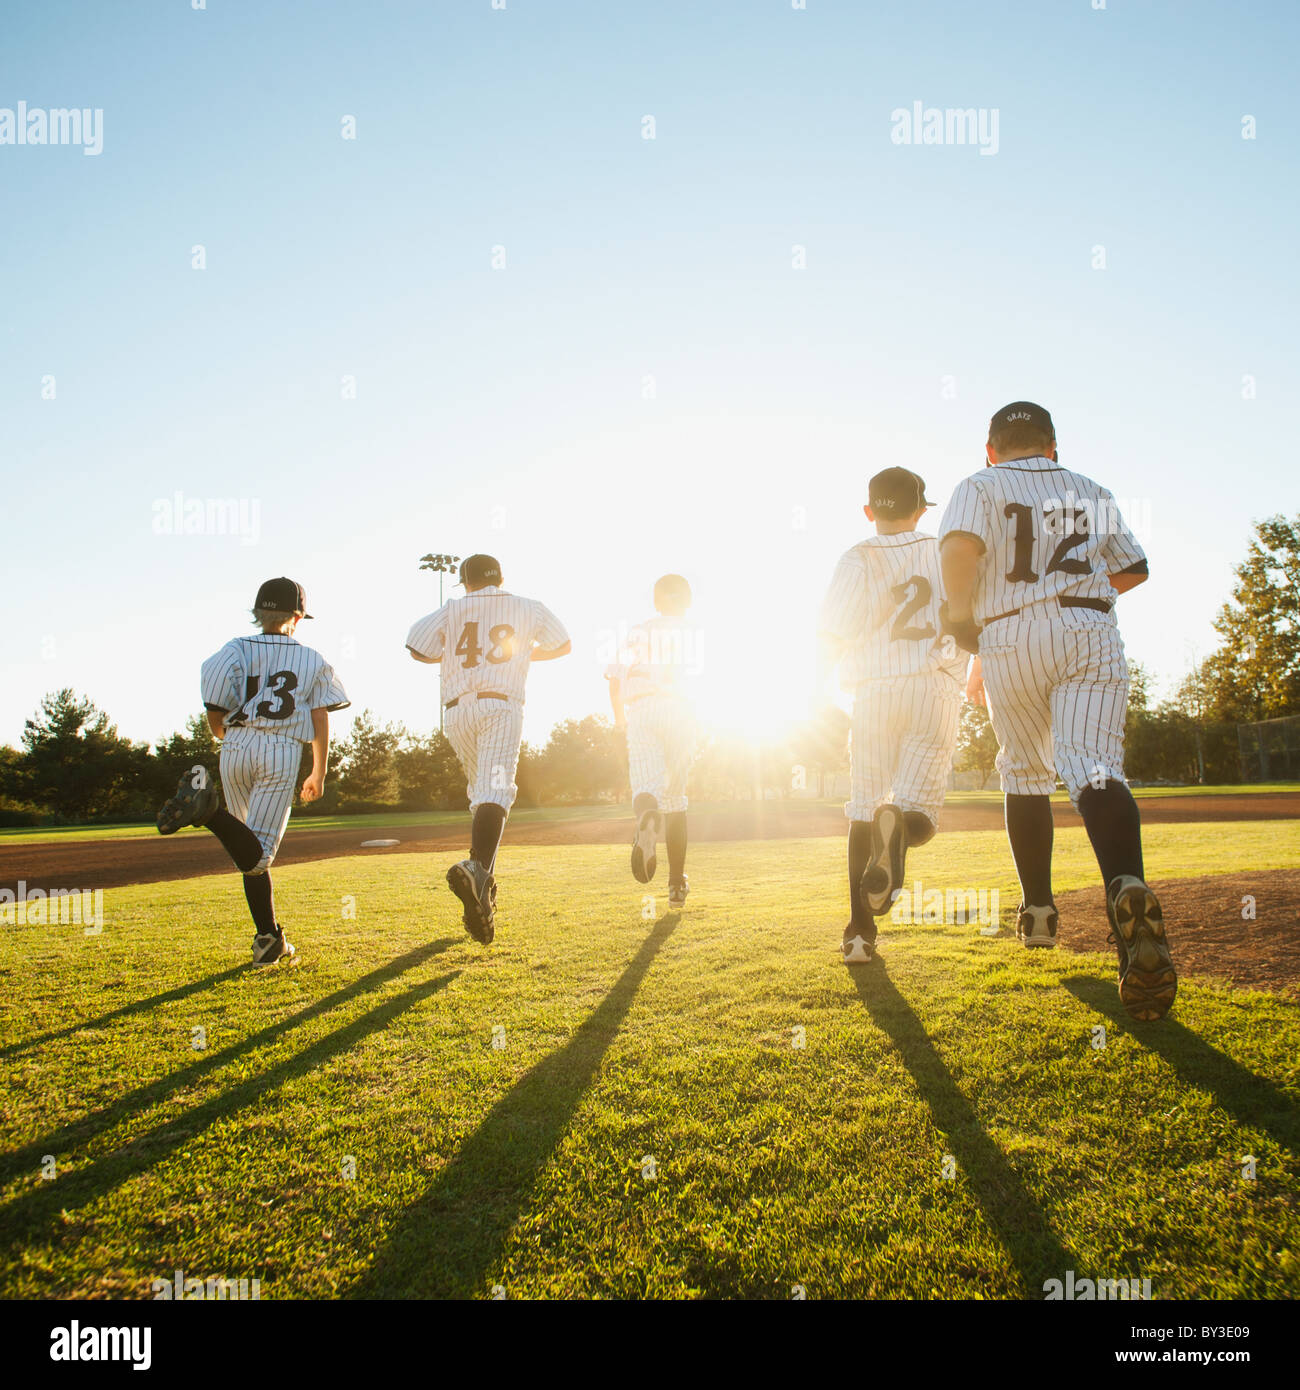 Baseball players (10-11) running on baseball diamond Stock Photo